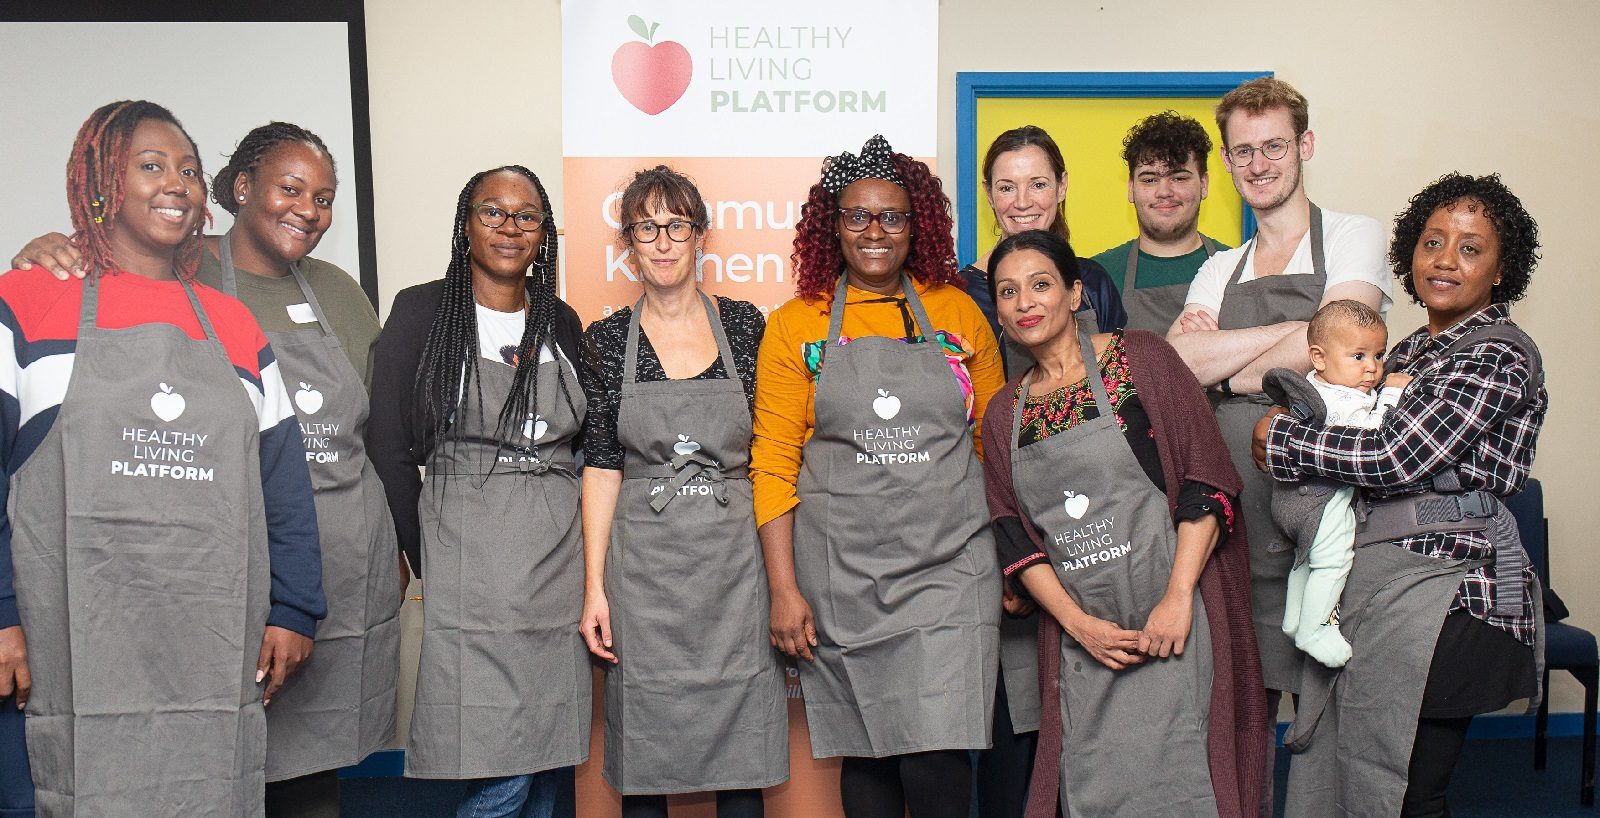 Healthy Living Platform kitchen team in grey aprons